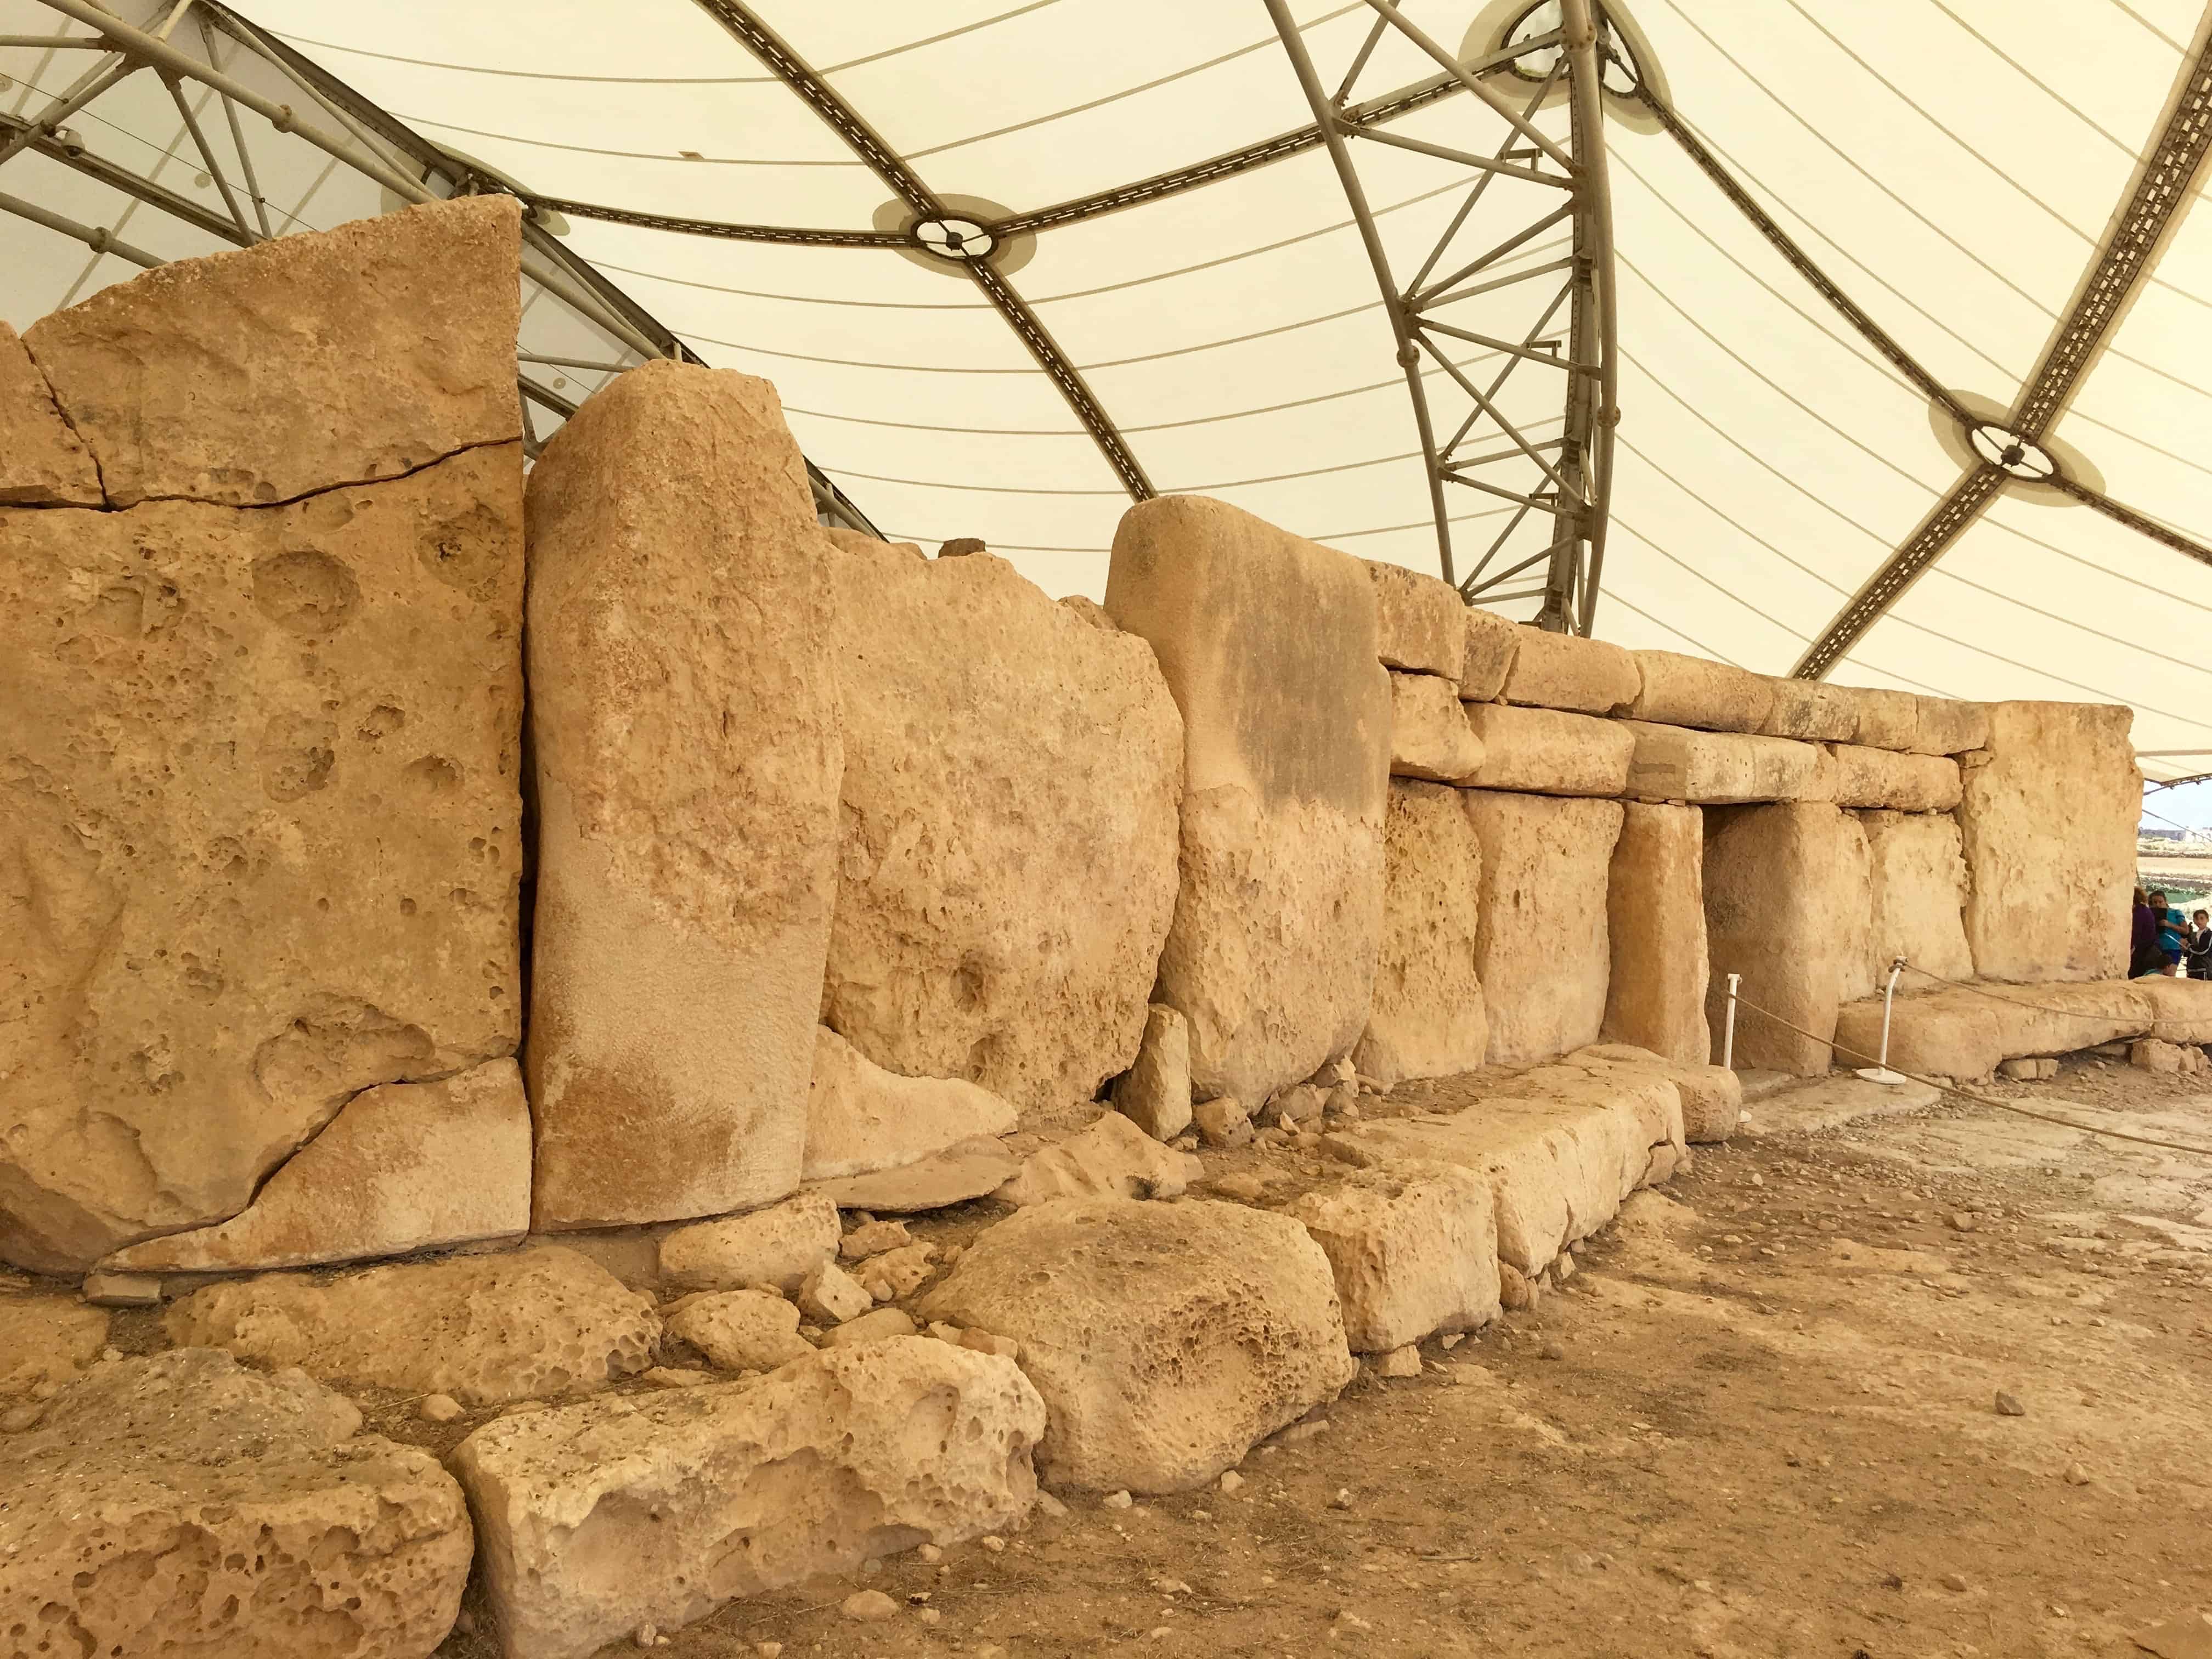 The imposing stone megaliths of Hagar Qim, Malta